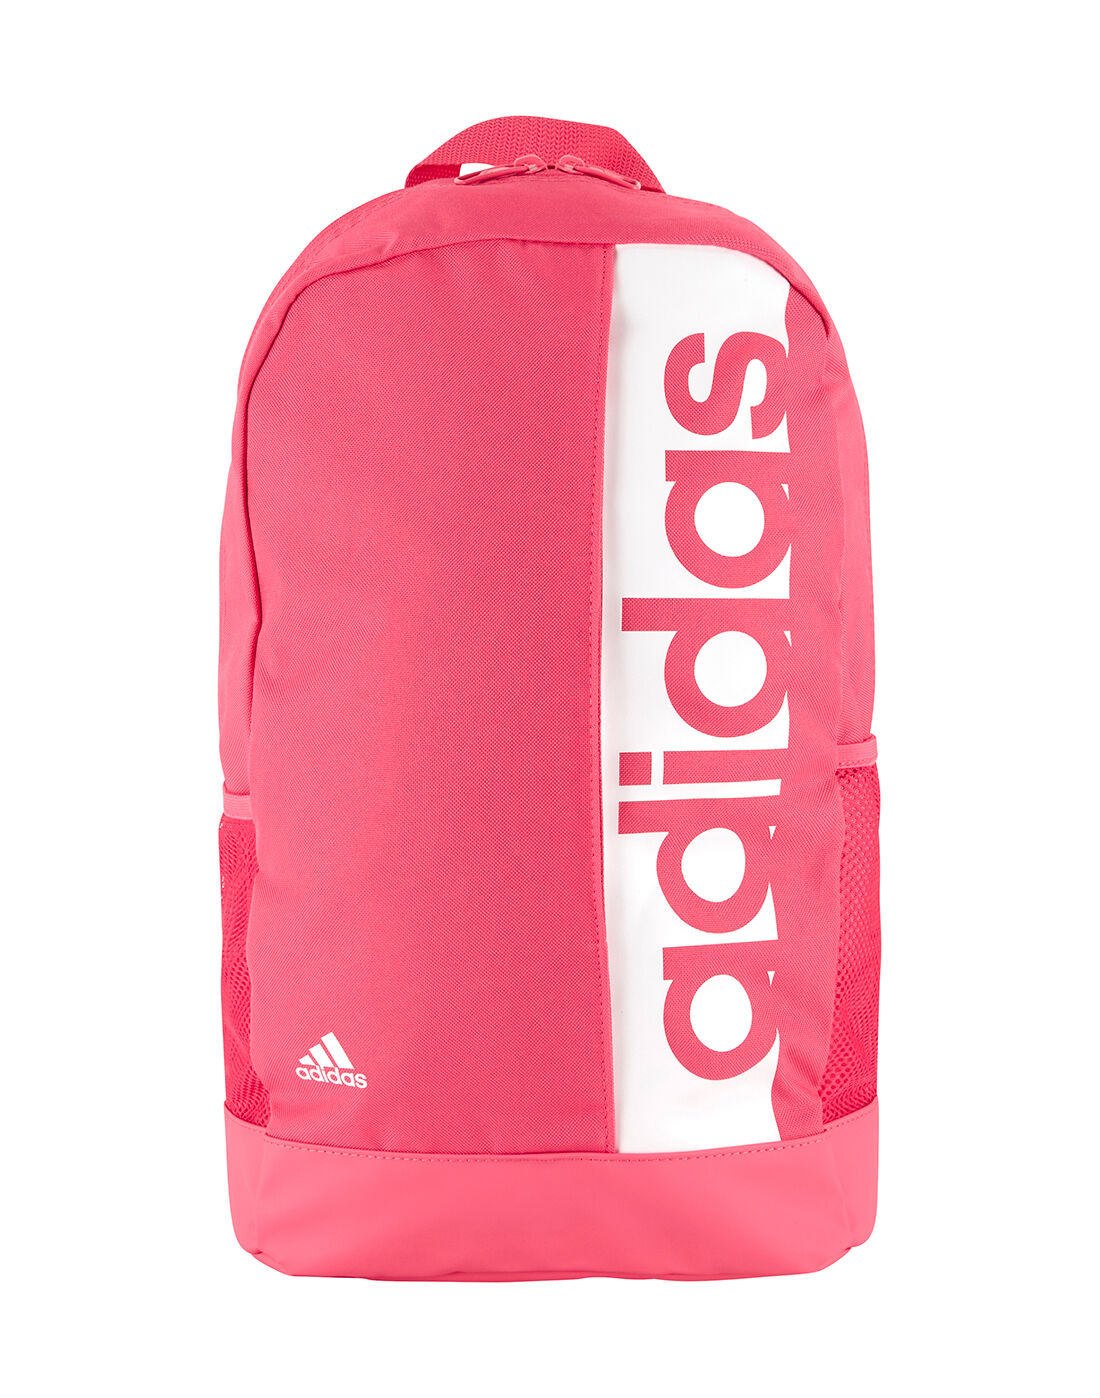 adidas school bags pink